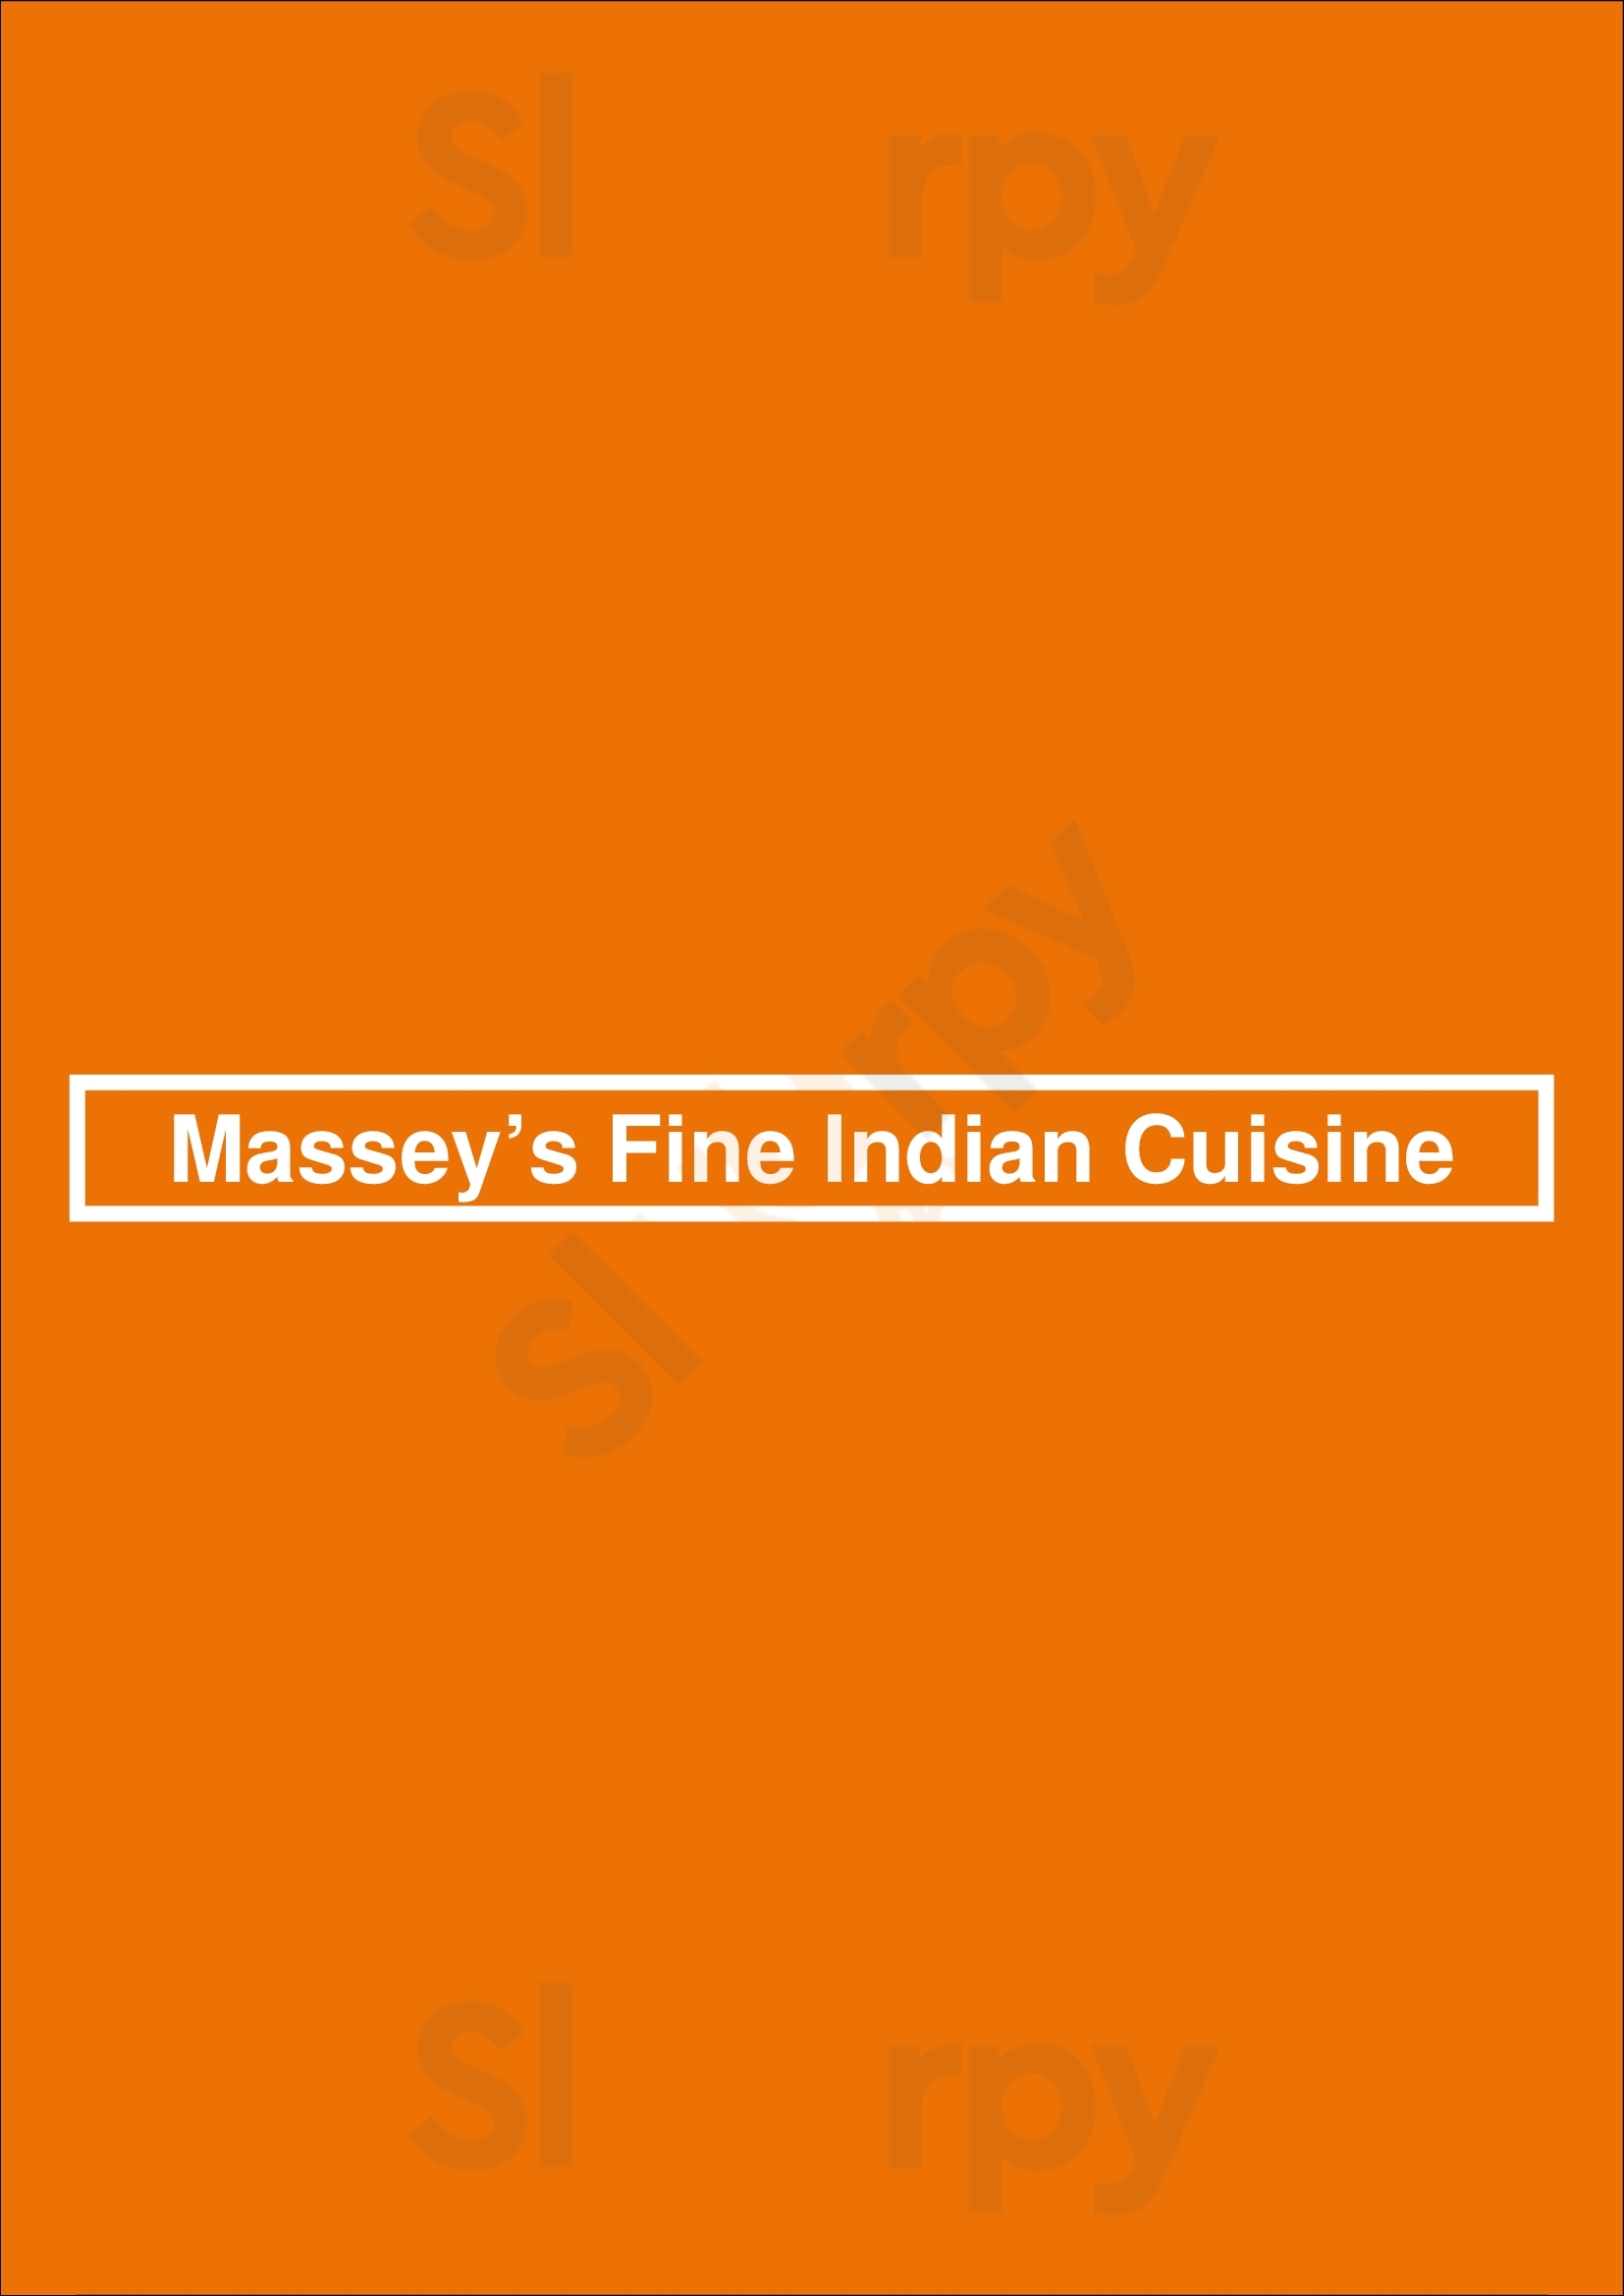 Massey’s Fine Indian Cuisine London Menu - 1